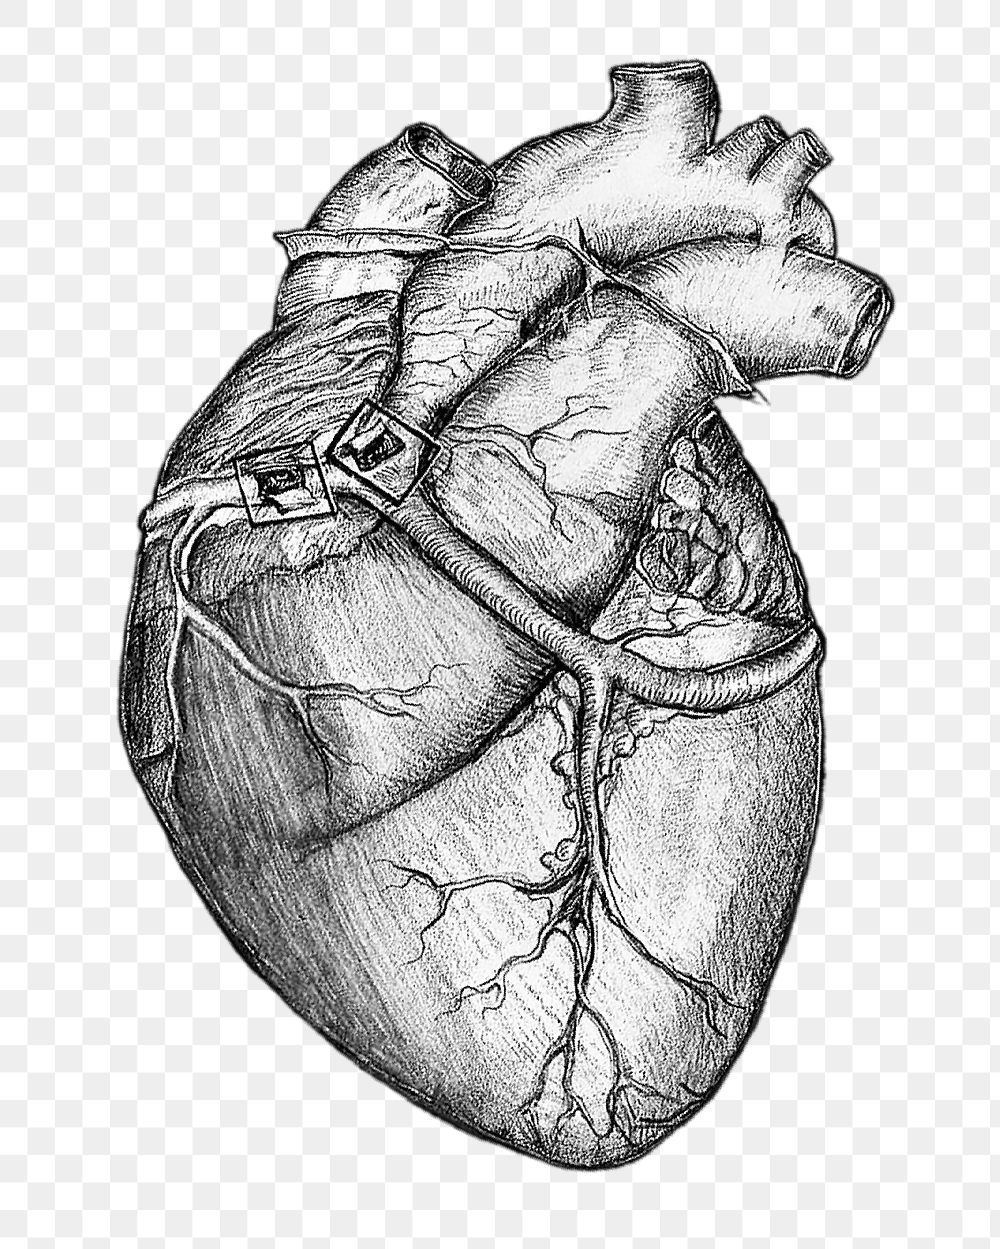 Realistic heart png sticker, medical illustration, transparent background